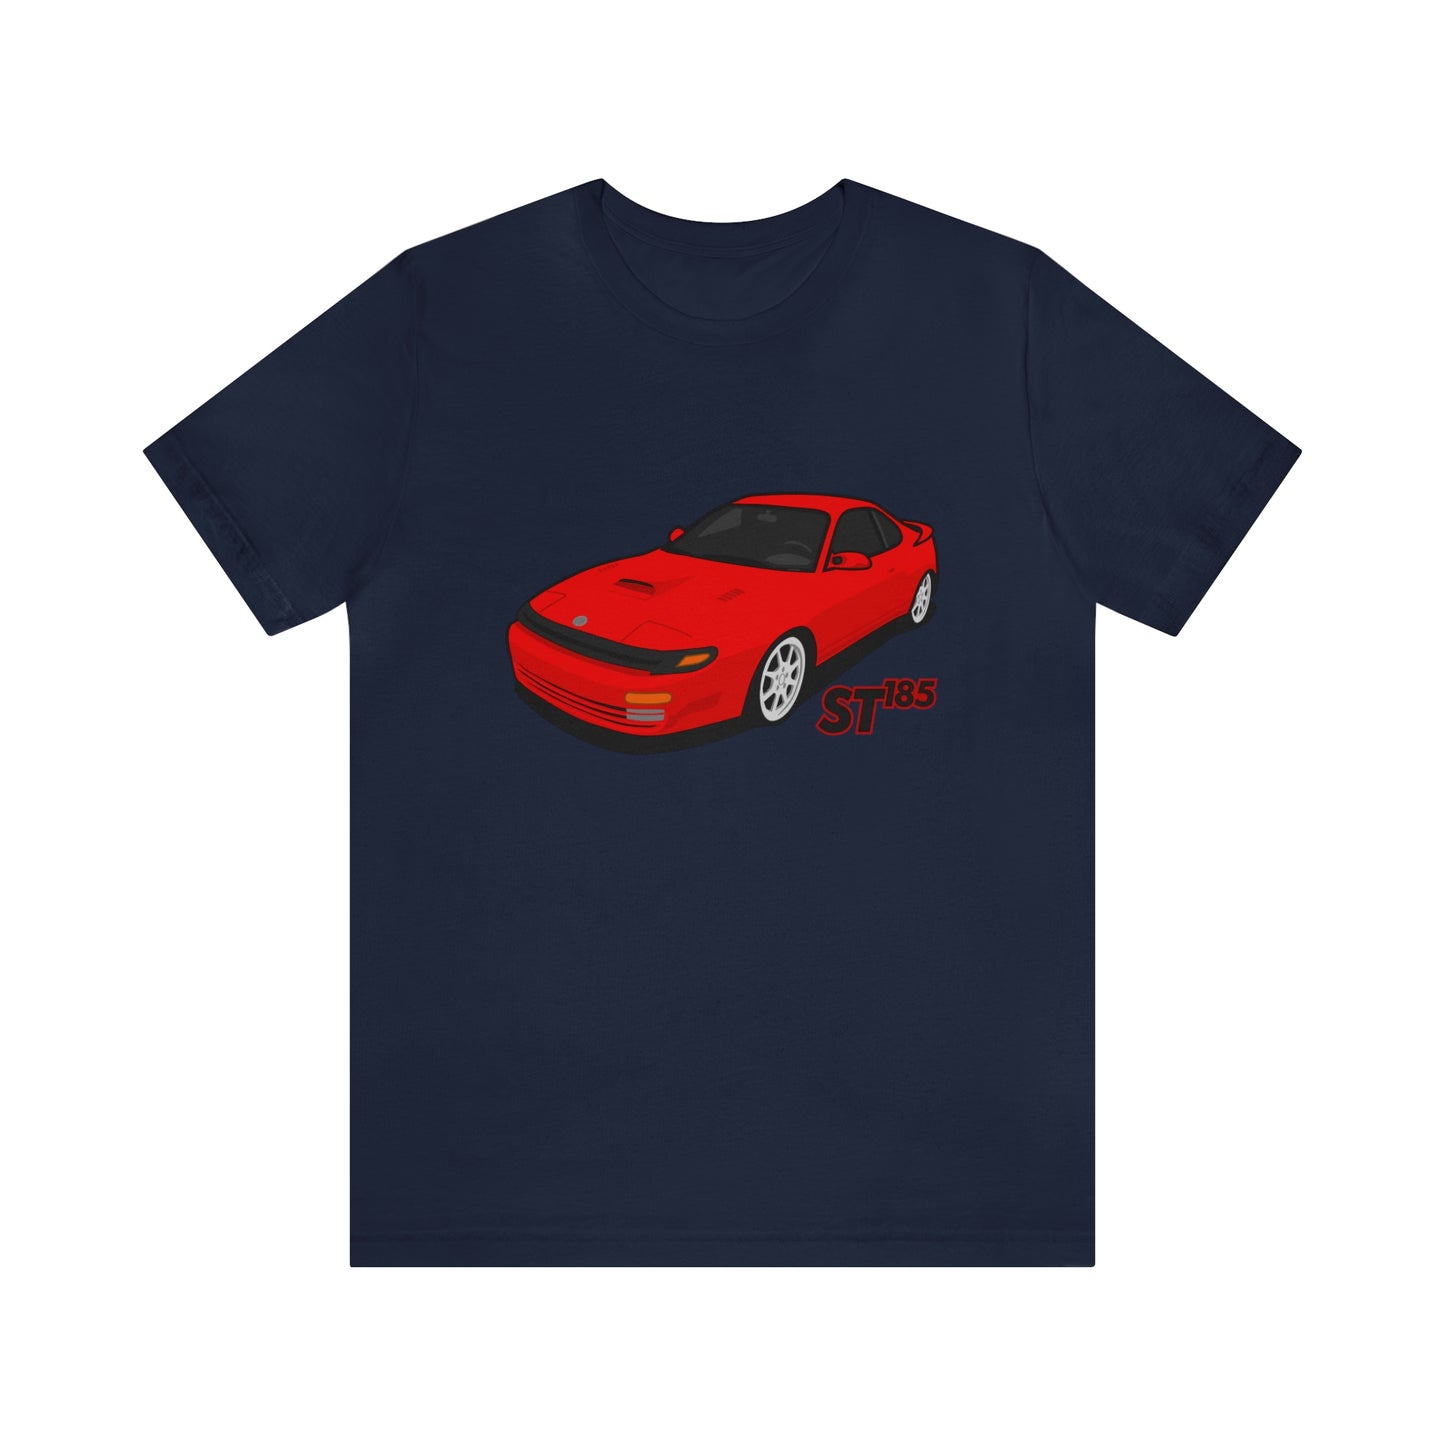 JDM Car Inspired T Shirt 49.